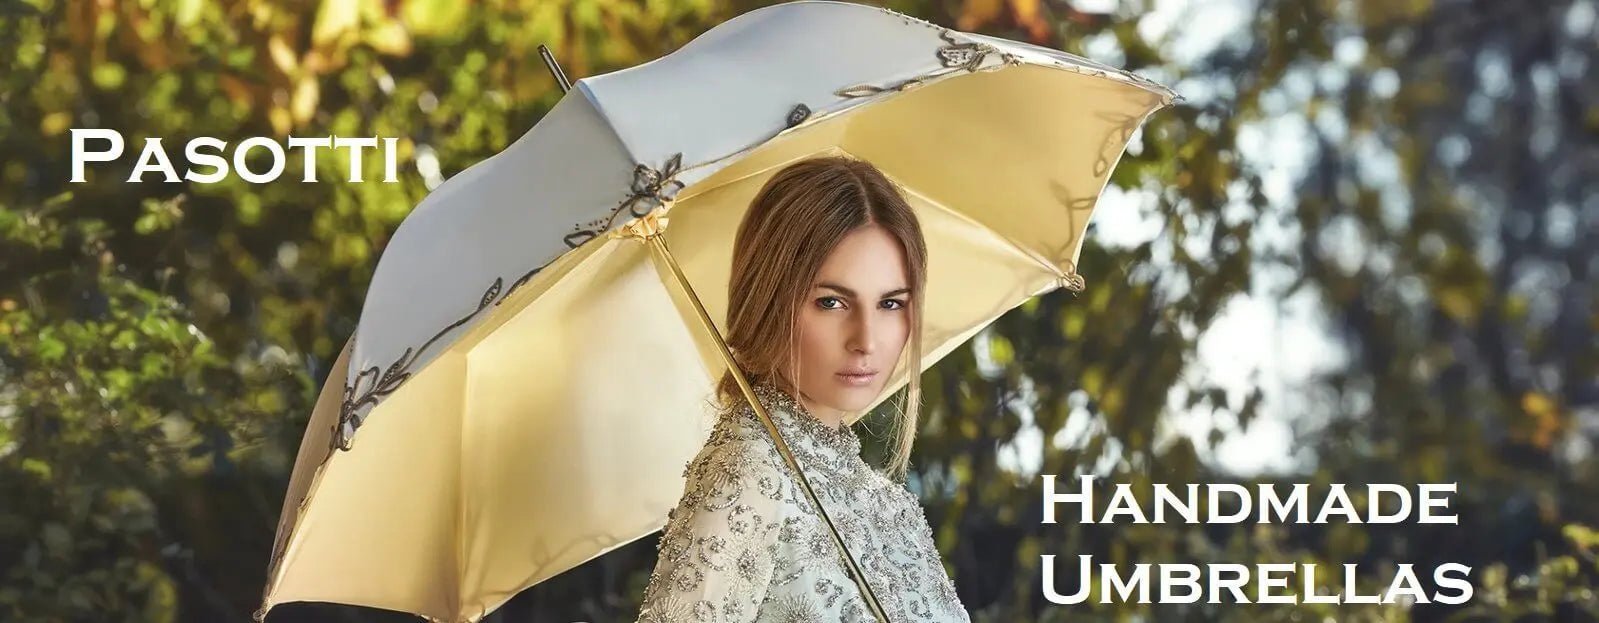 Pasotti Handmade Umbrellas